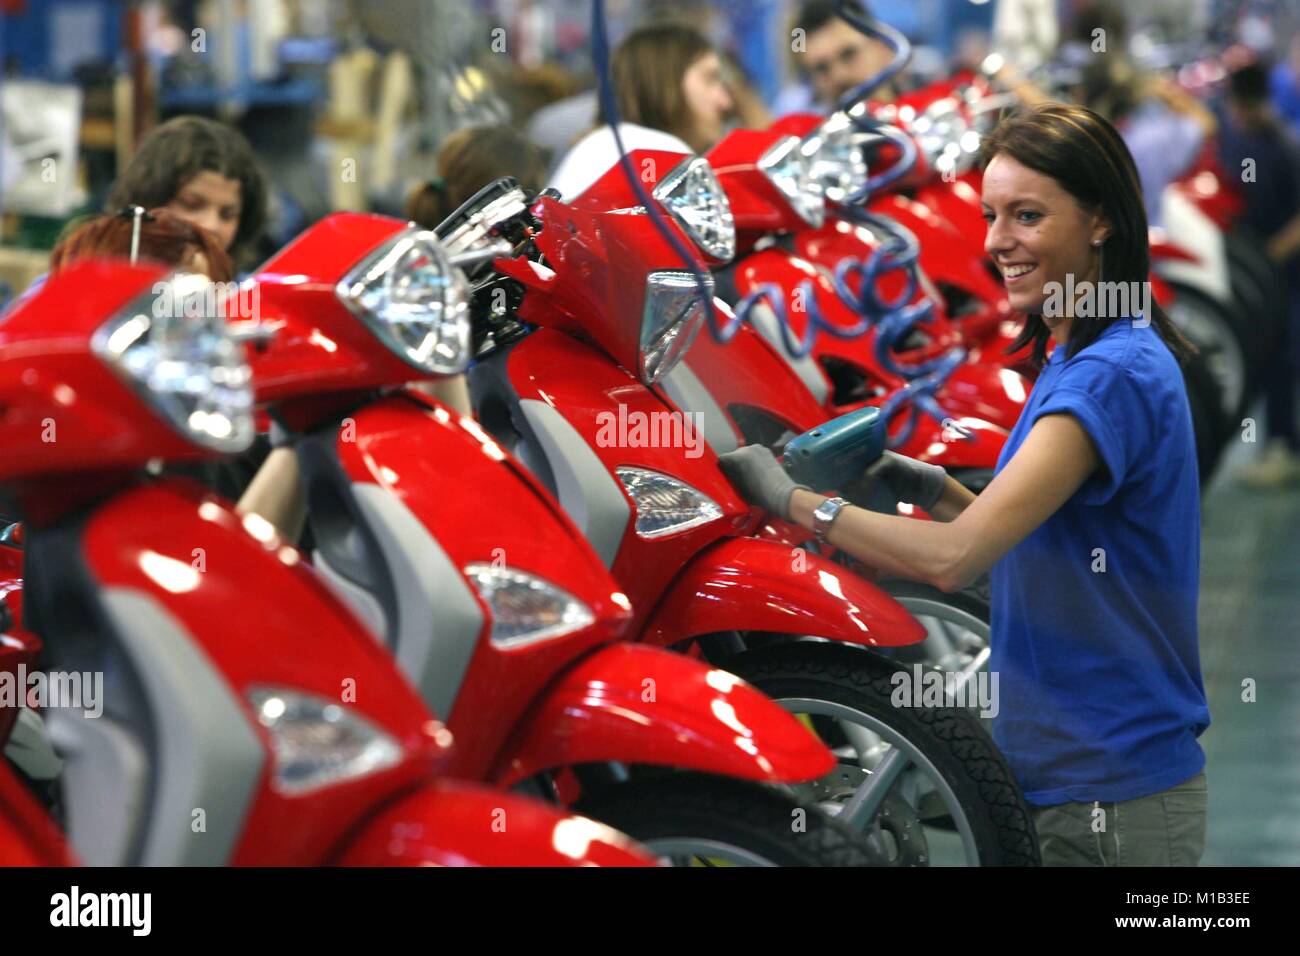 Piaggio Factory, production of motorcycles and scooters, Pontedera, Pisa, Italy    Credit © Riccardo Squillantini/Sintesi/Alamy Stock Photo Stock Photo